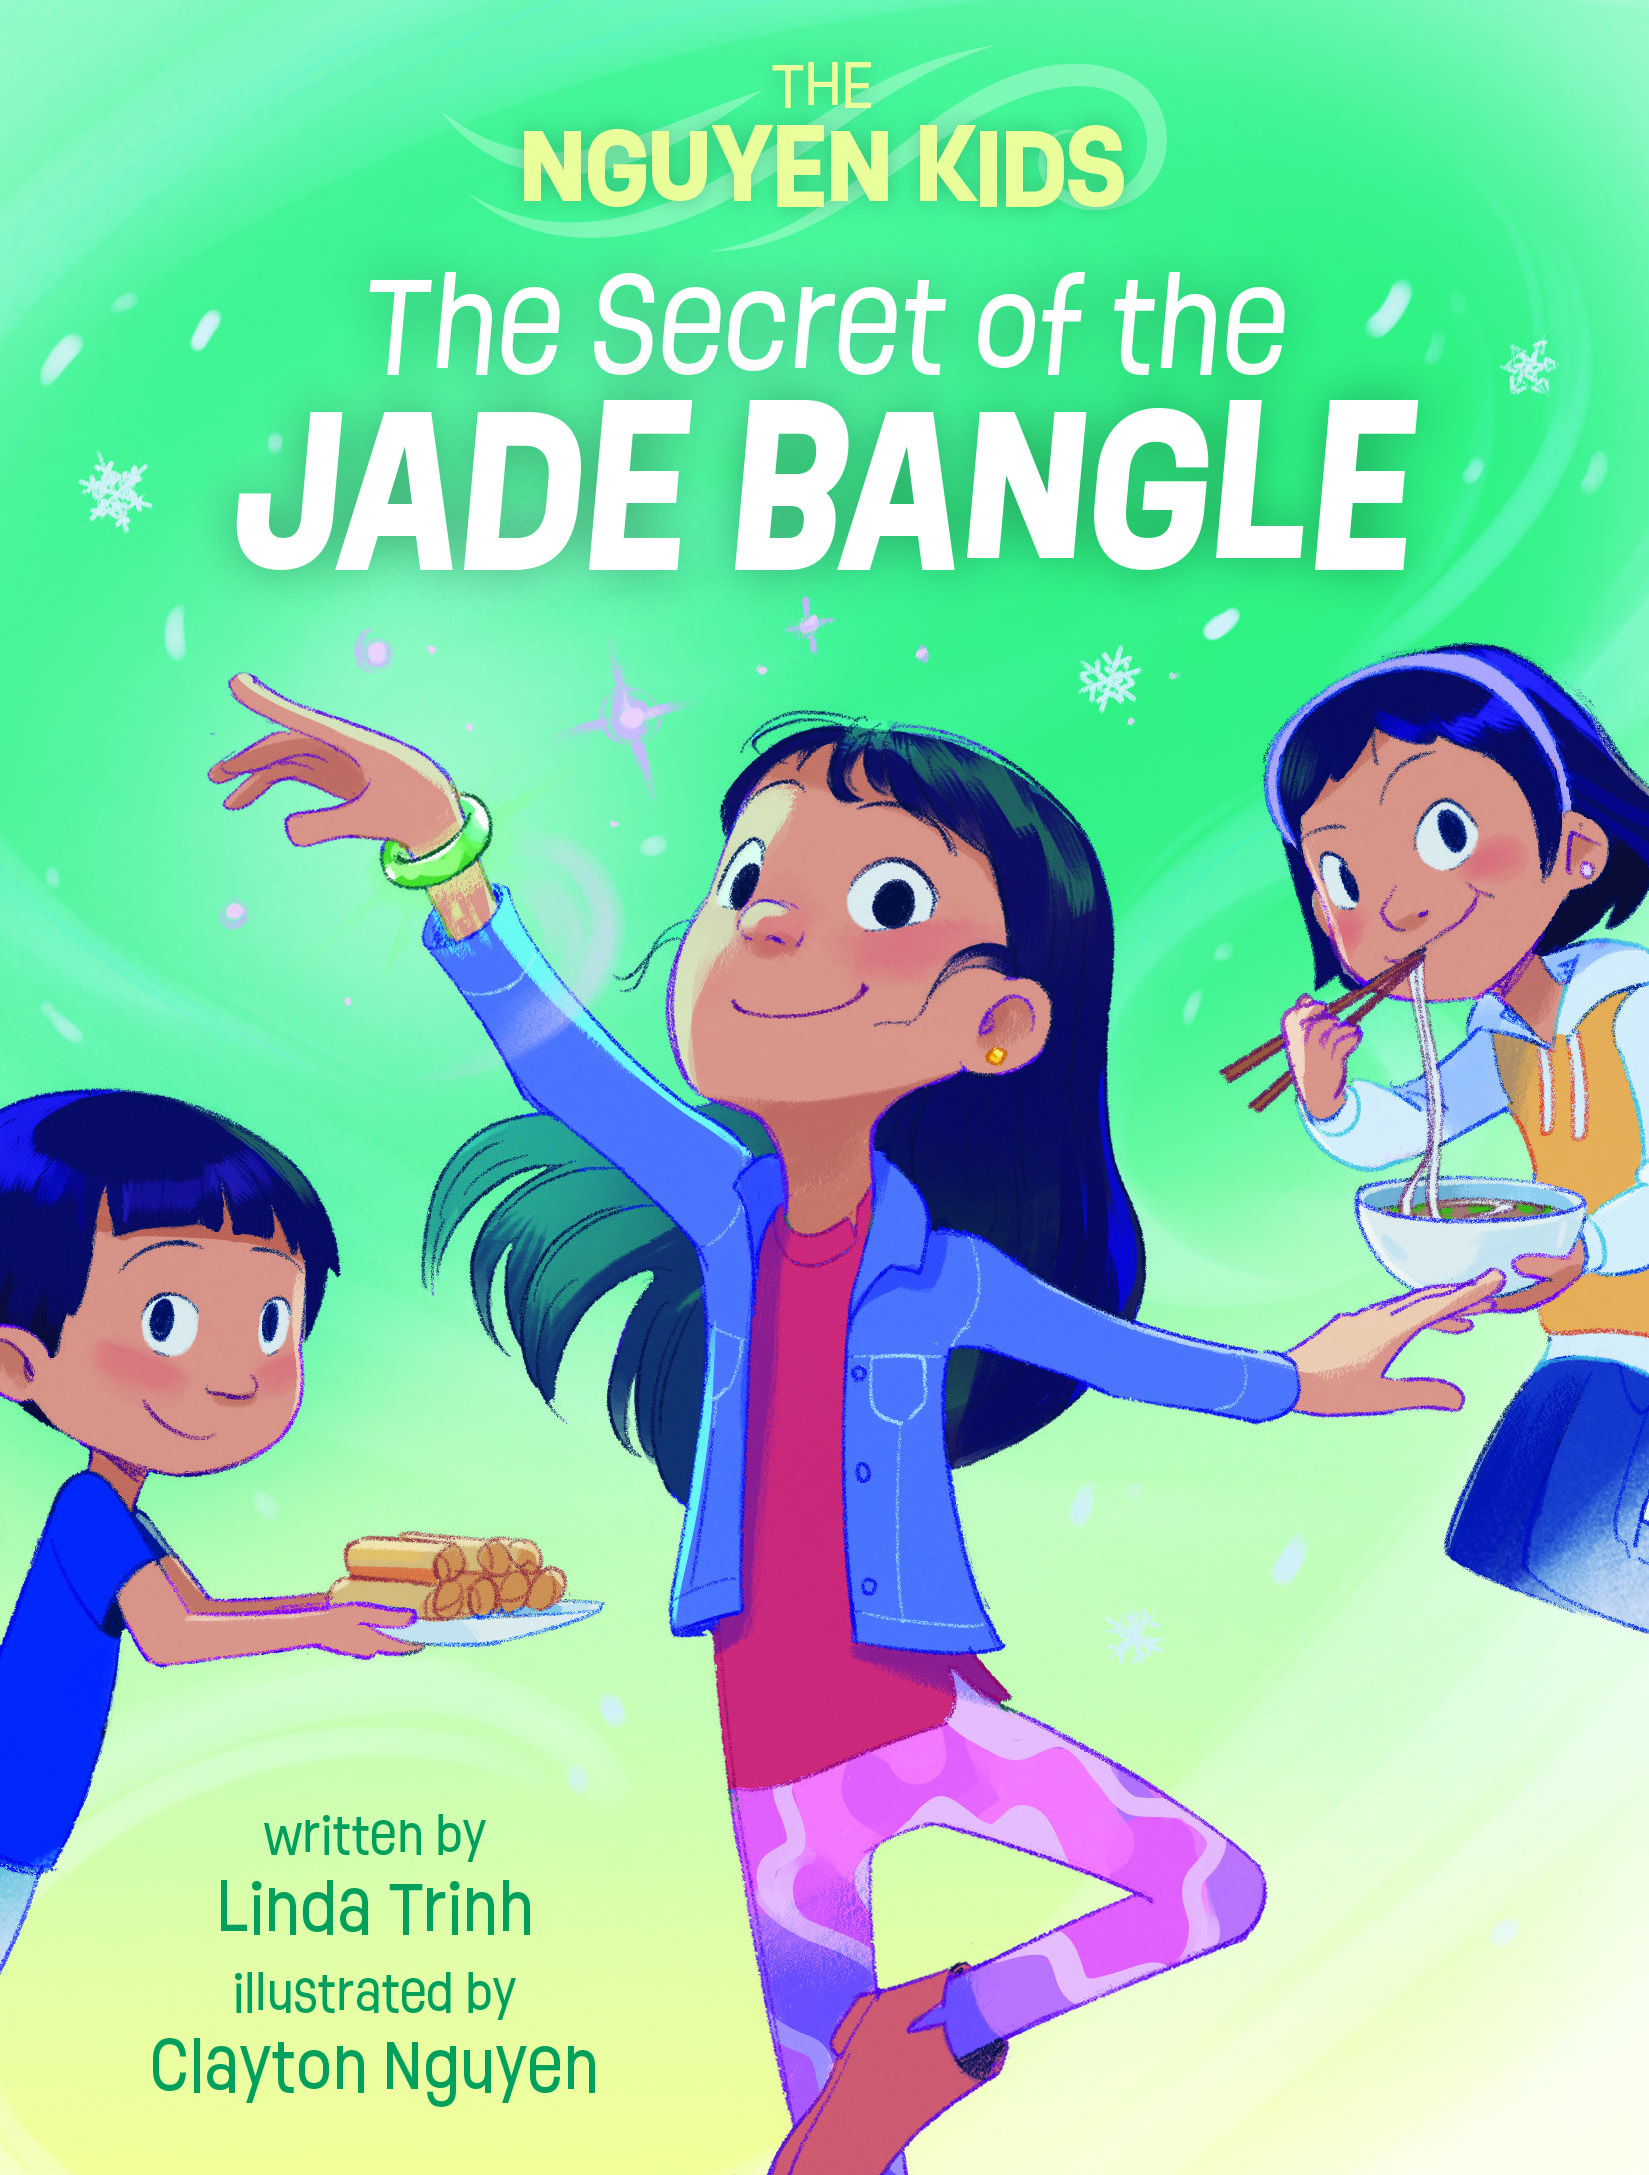 The Nguyen kids Vol. 1 - The Secret of the Jade Bangle | 